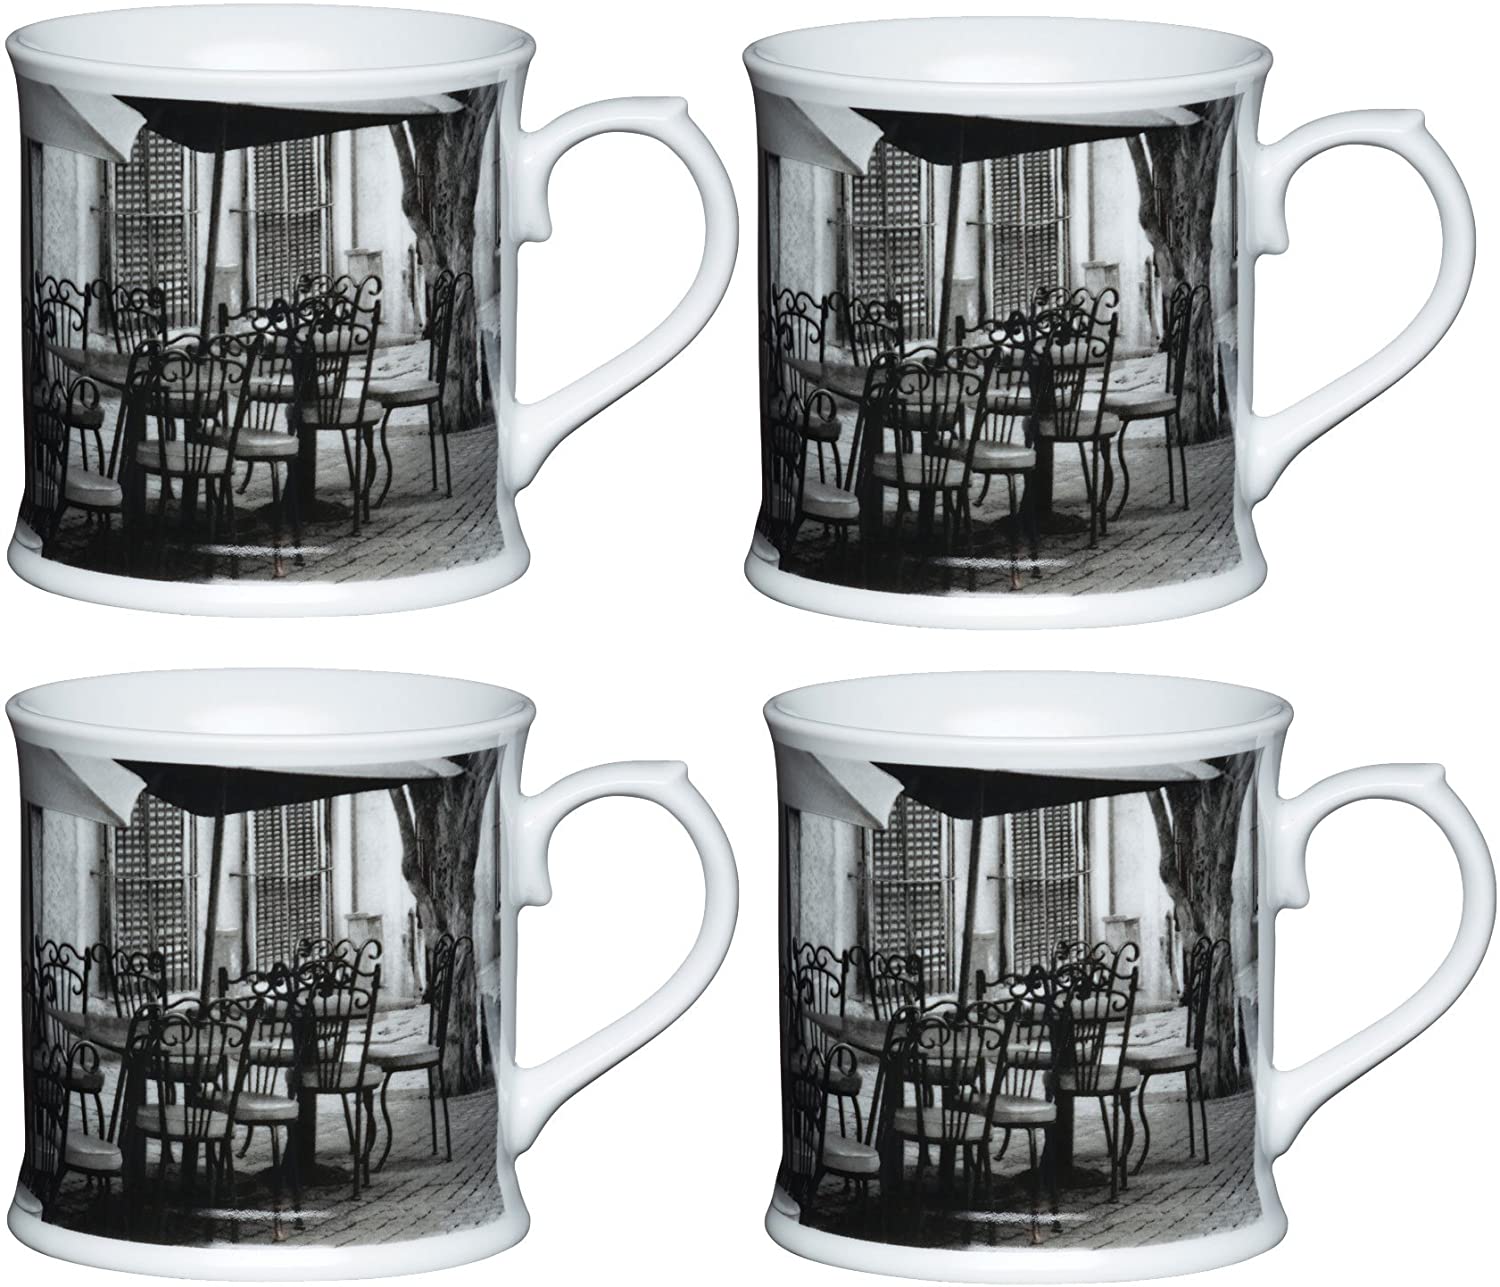 Kitchencraft Porcelain Cafe Tree Bierkrugförmig Mug – Multi Colour (Set of 4)